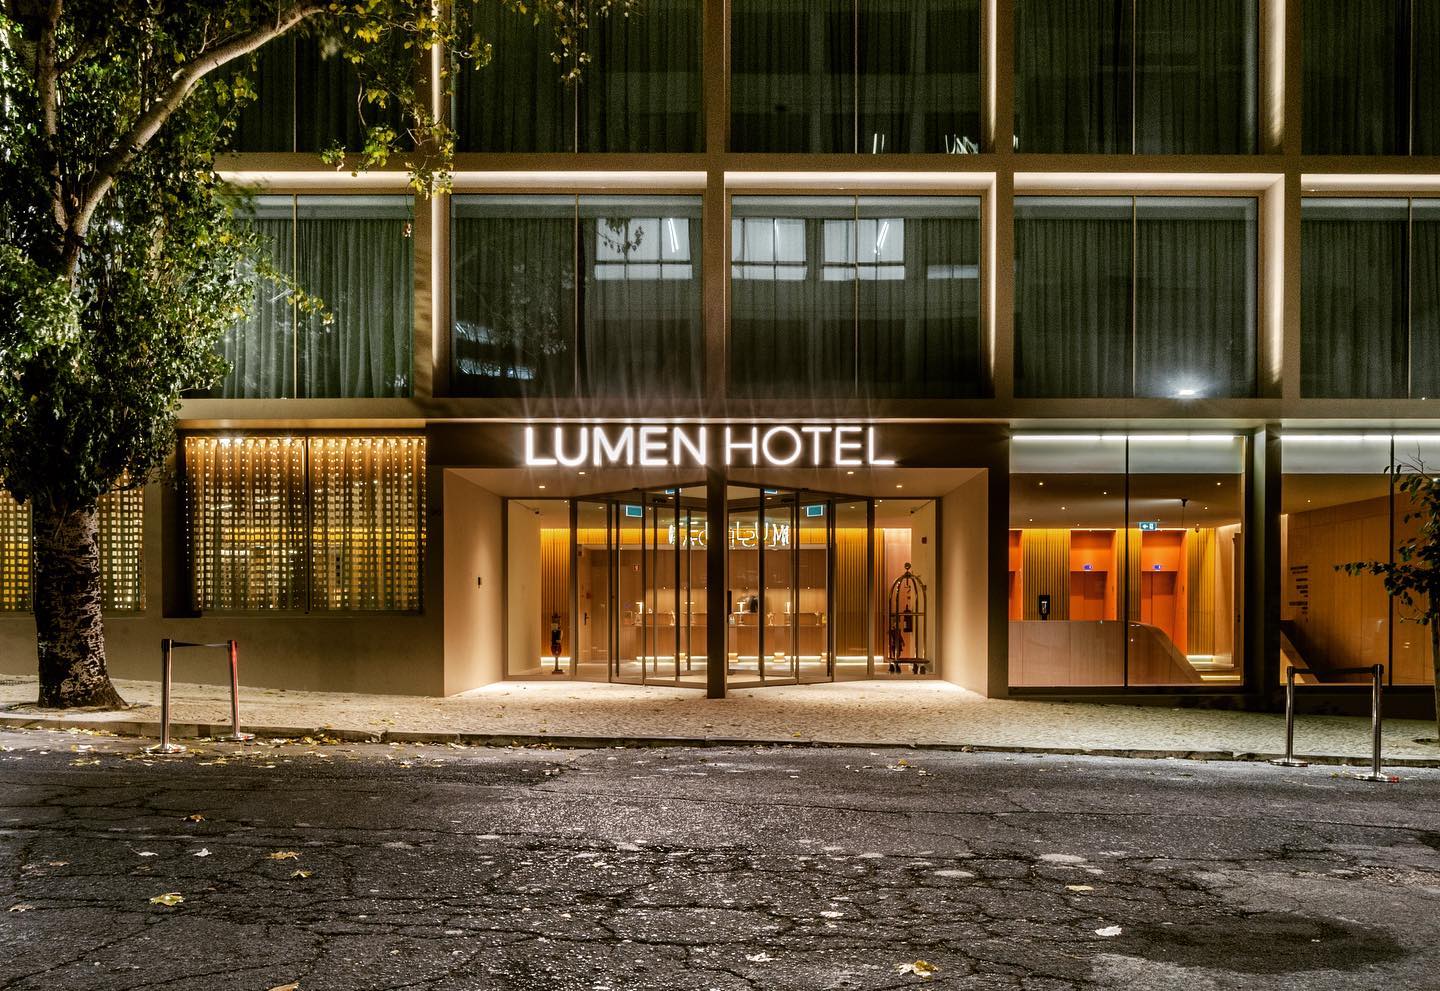 Lumen Hotel, Lisbon #architecture by @fredericovalsassina #interiordesign by @p06.studio #lightingdesign by Filamento Photo credits: Gonçalo Soares #hoteldesign